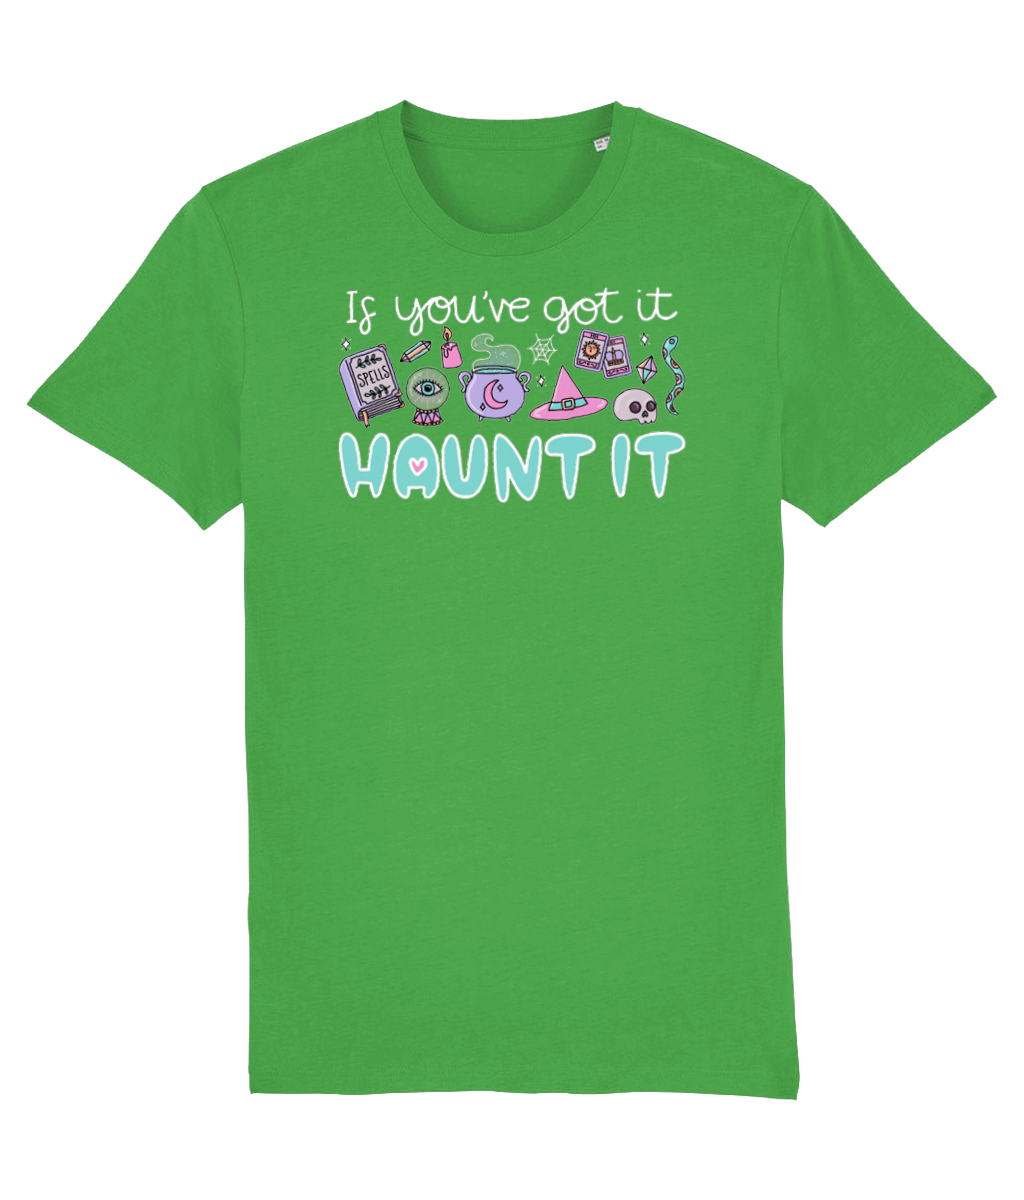 Spellbound T-Shirt - If you've got it...haunt it